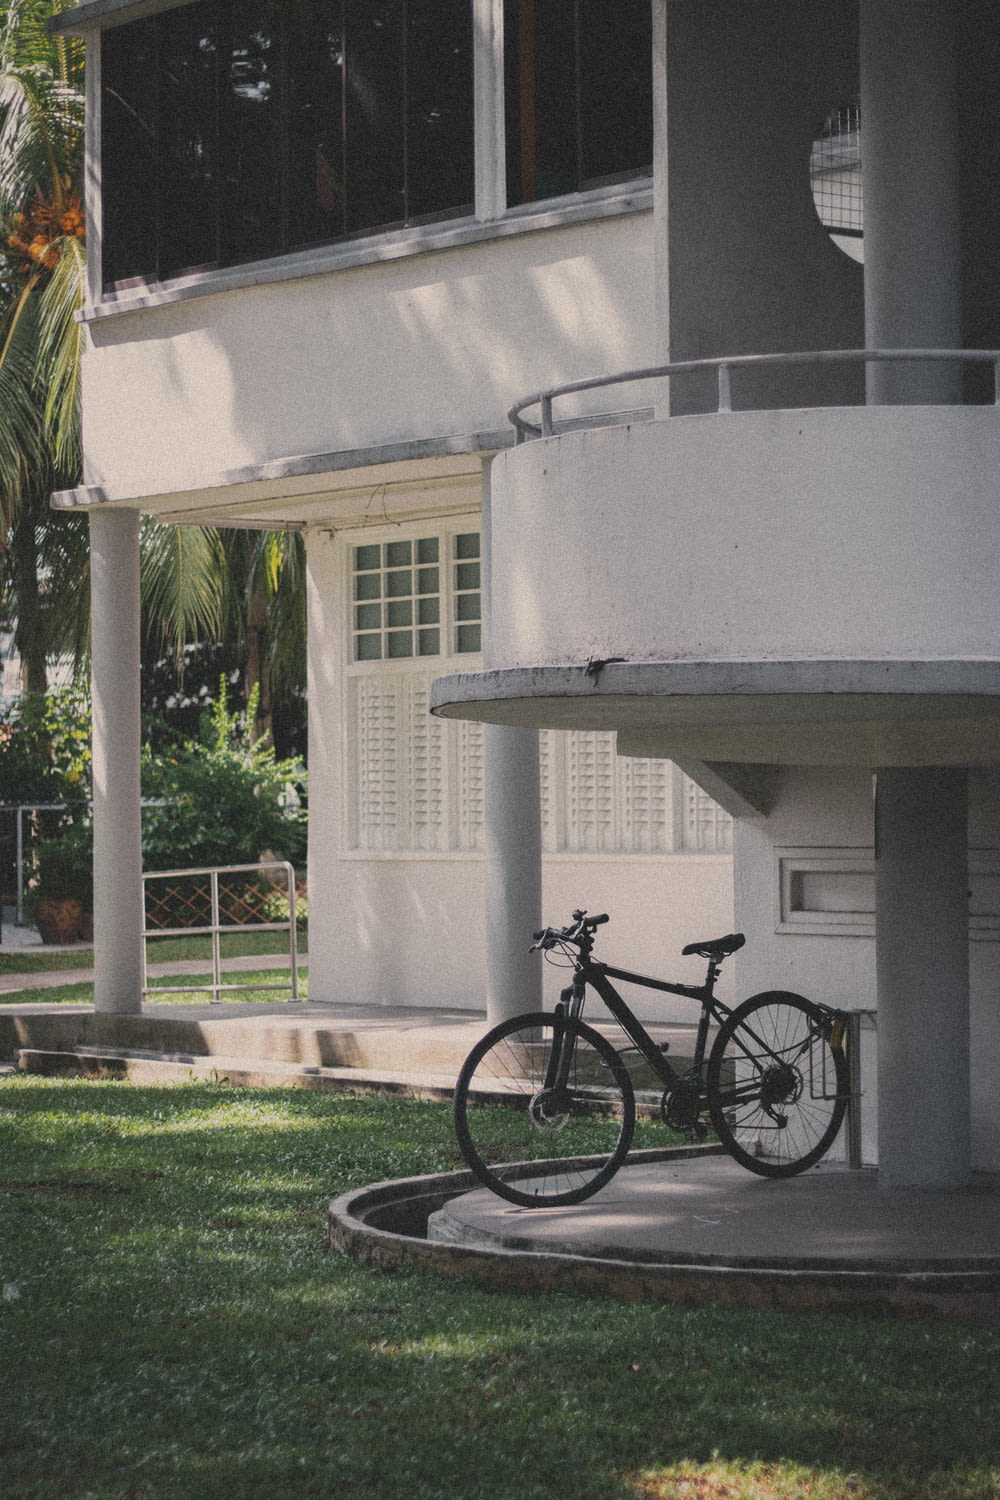 bicicleta preta estacionada ao lado do edifício de concreto branco durante o dia